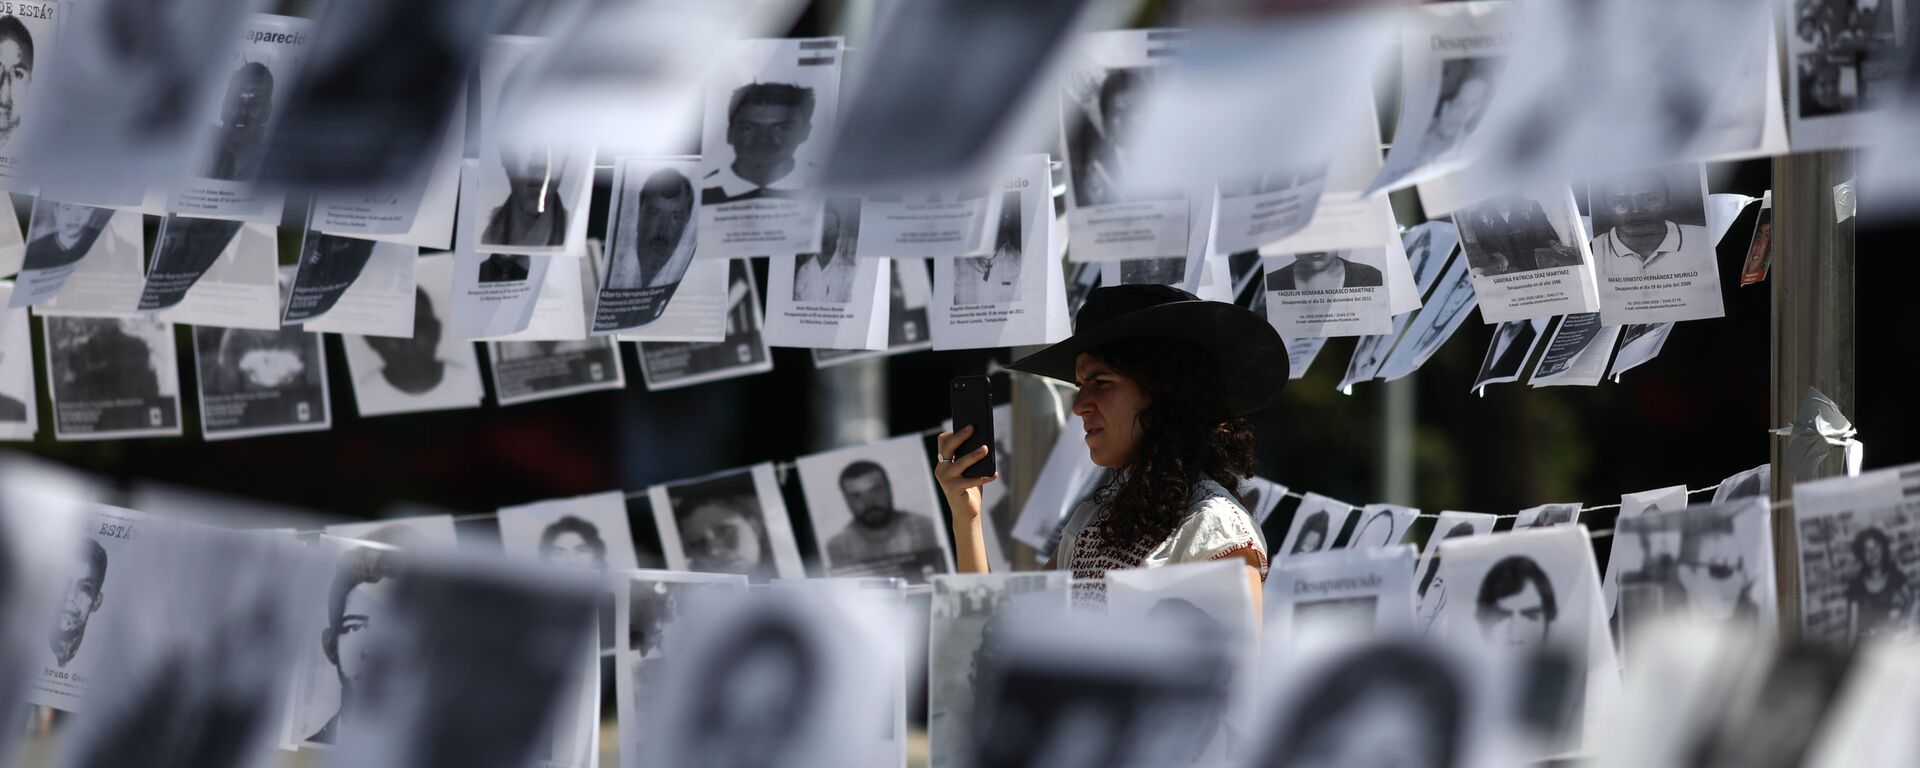 Fotos de desaparecidos en México (imagen referencial) - Sputnik Mundo, 1920, 01.06.2021